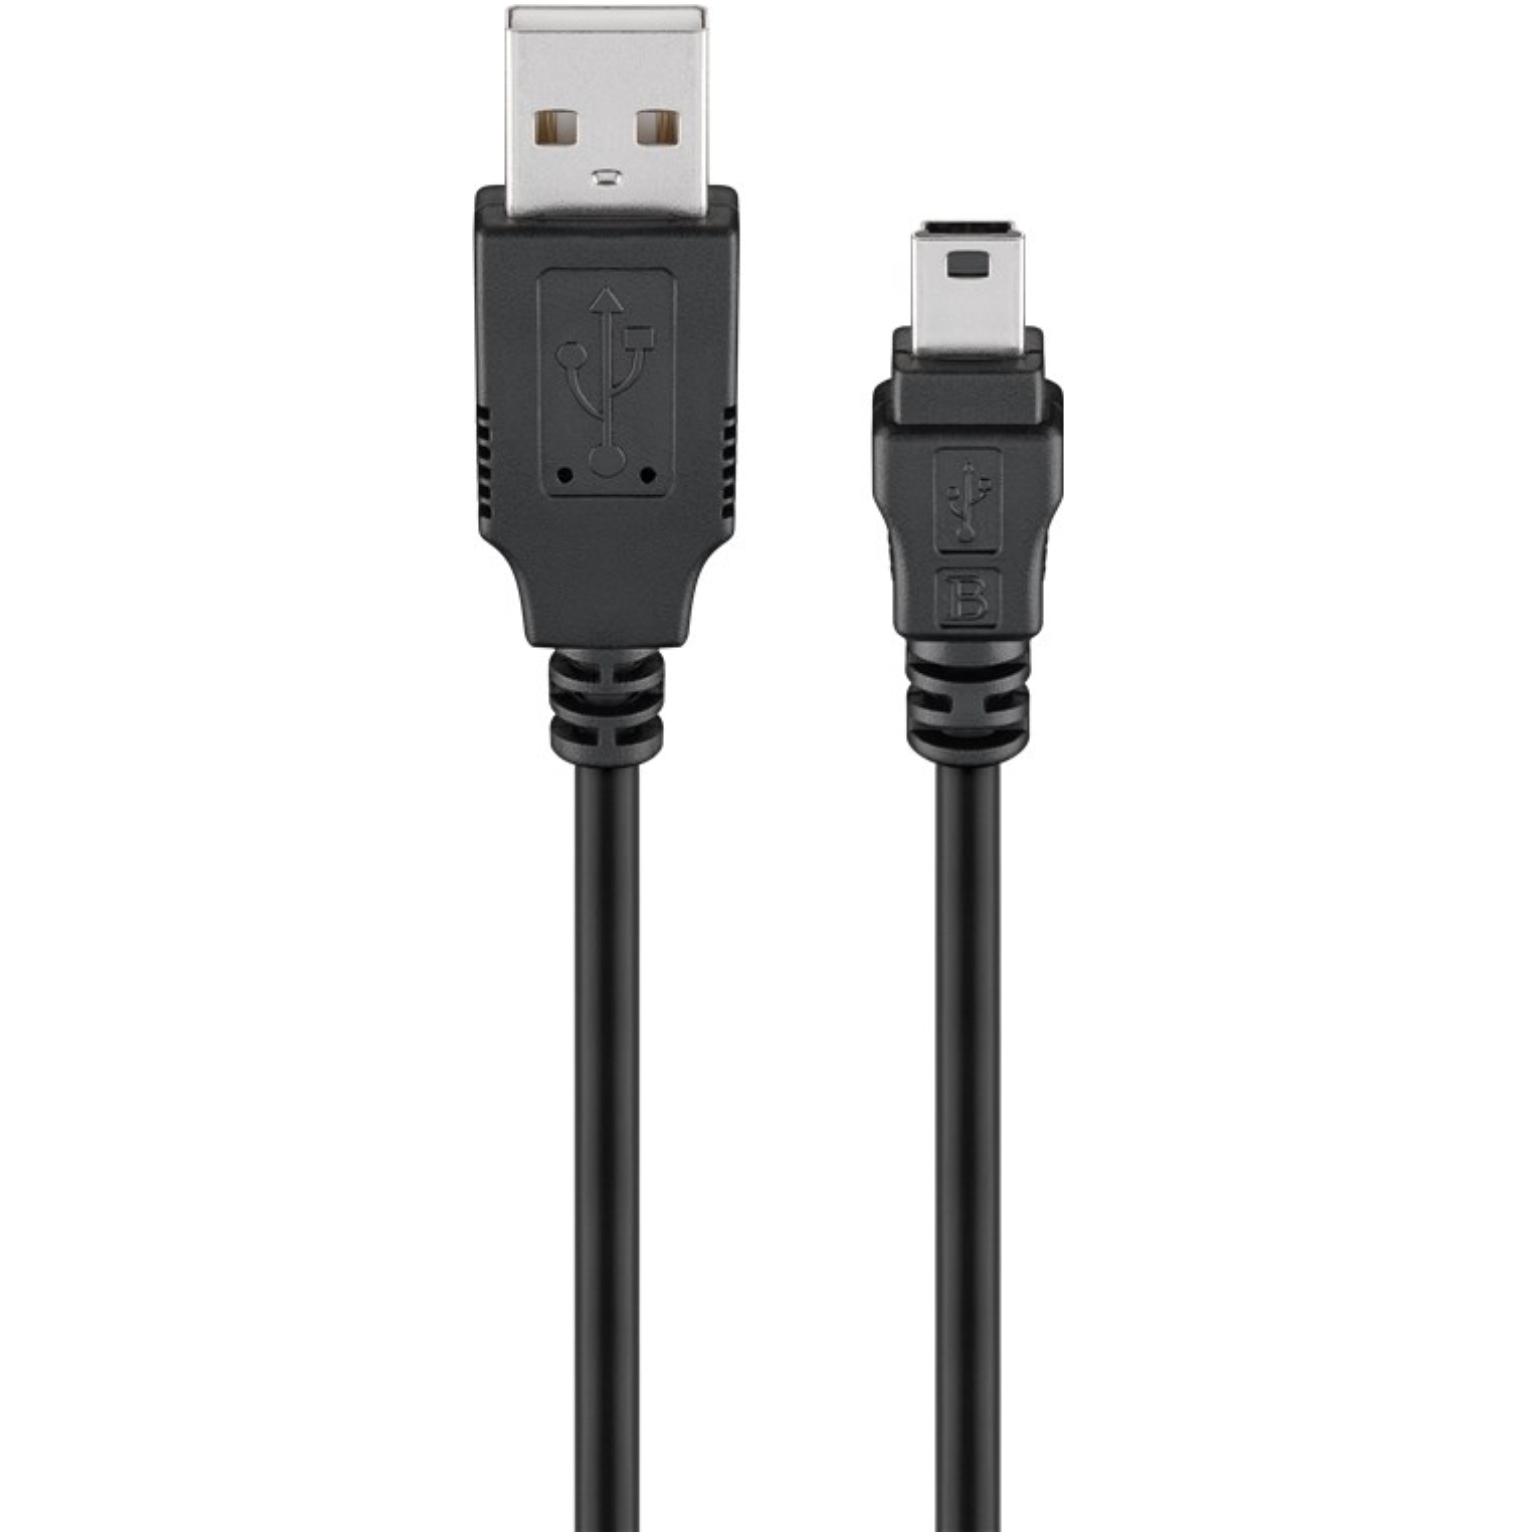 bioscoop Knikken kiespijn USB 2.0 Mini Kabel - USB A naar Mini USB Kabel - Zwart, Type: 2.0 - High  Speed, Aansluiting 1: USB A male, Aansluiting 2: Mini USB male 1.5 meter.